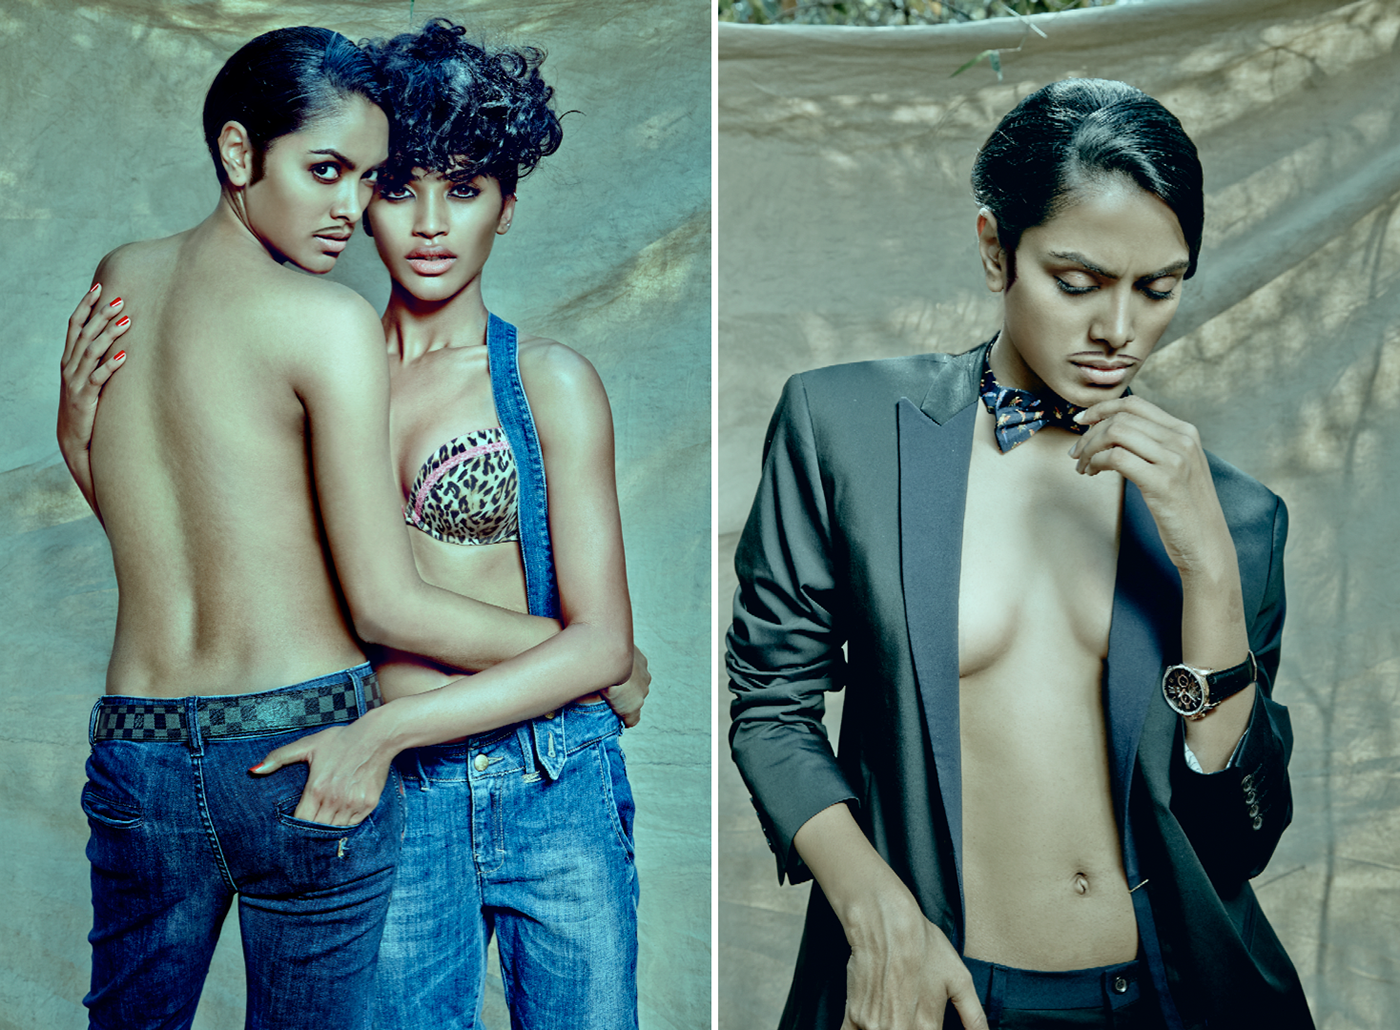 androgynous couple Love Nature sushant panchal sushant panchal art images photos models